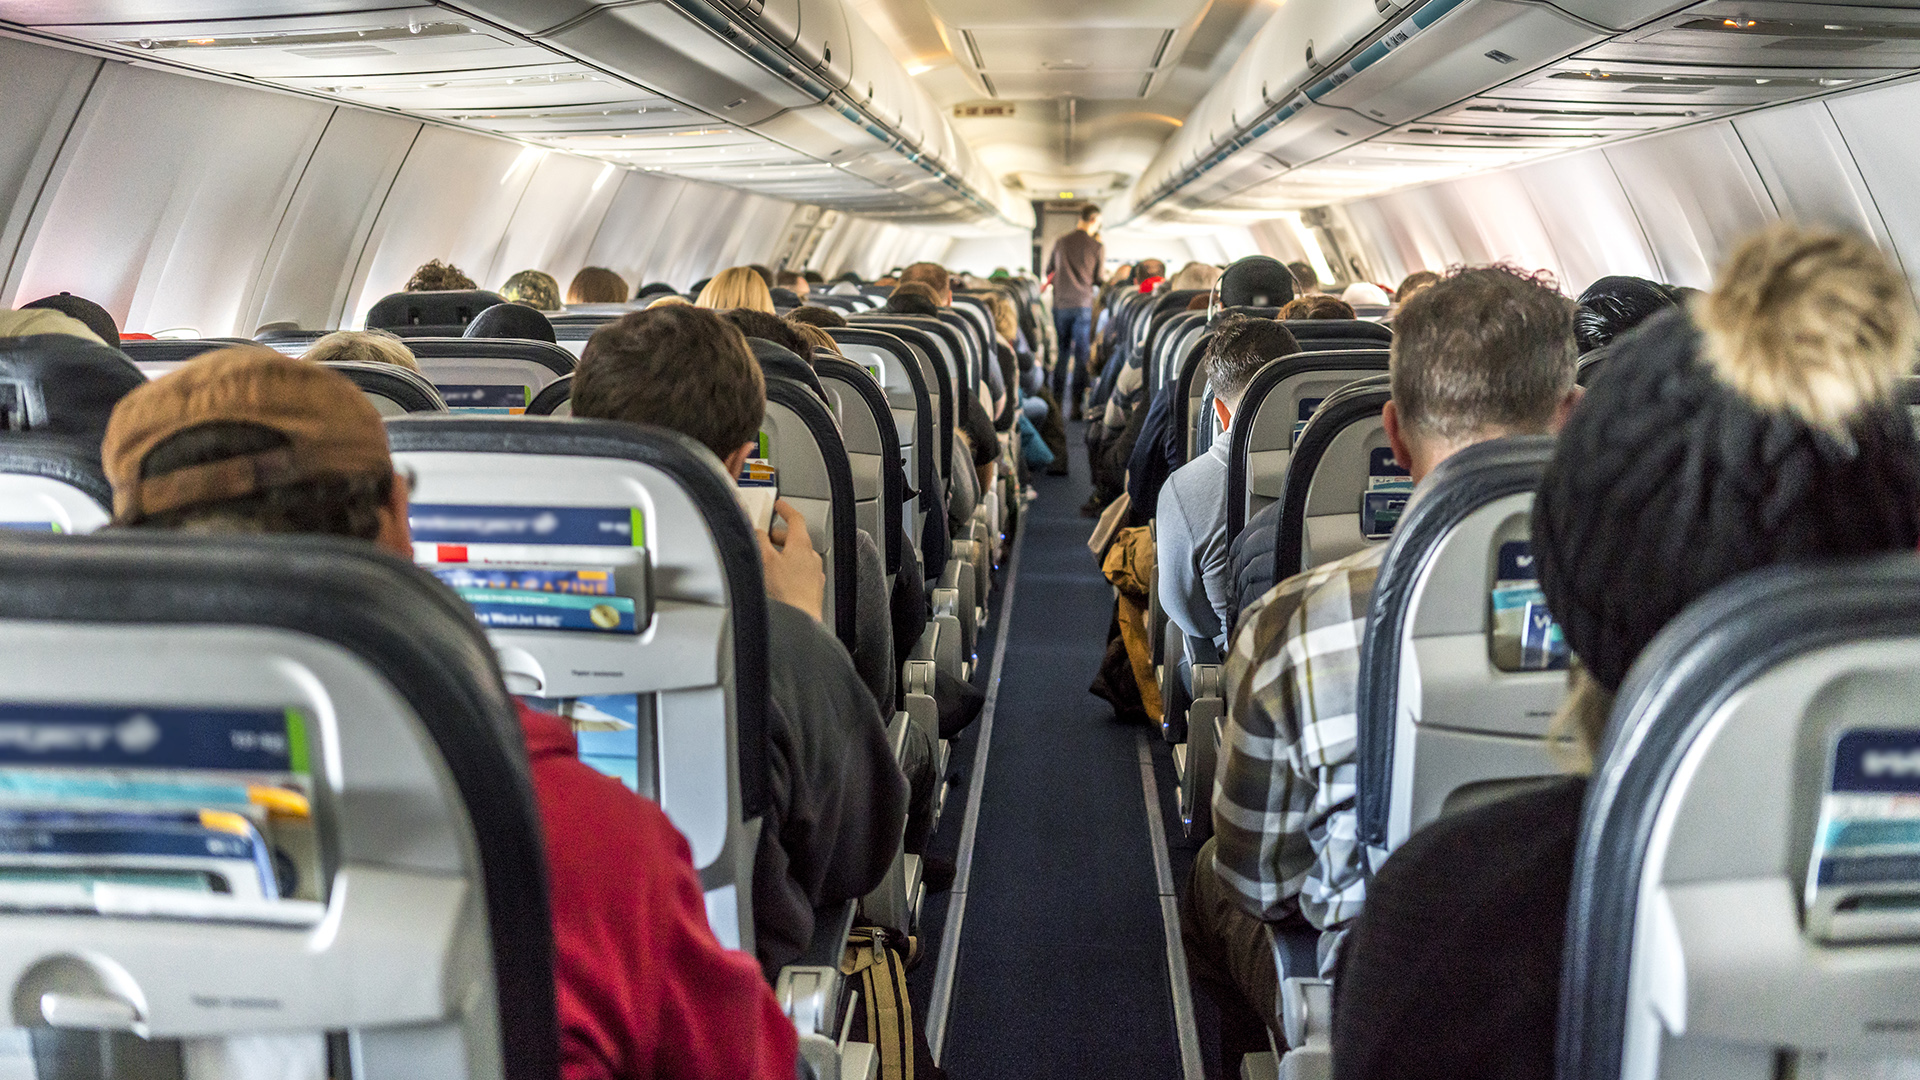 People-employee-plane-safety-precaution-crowd